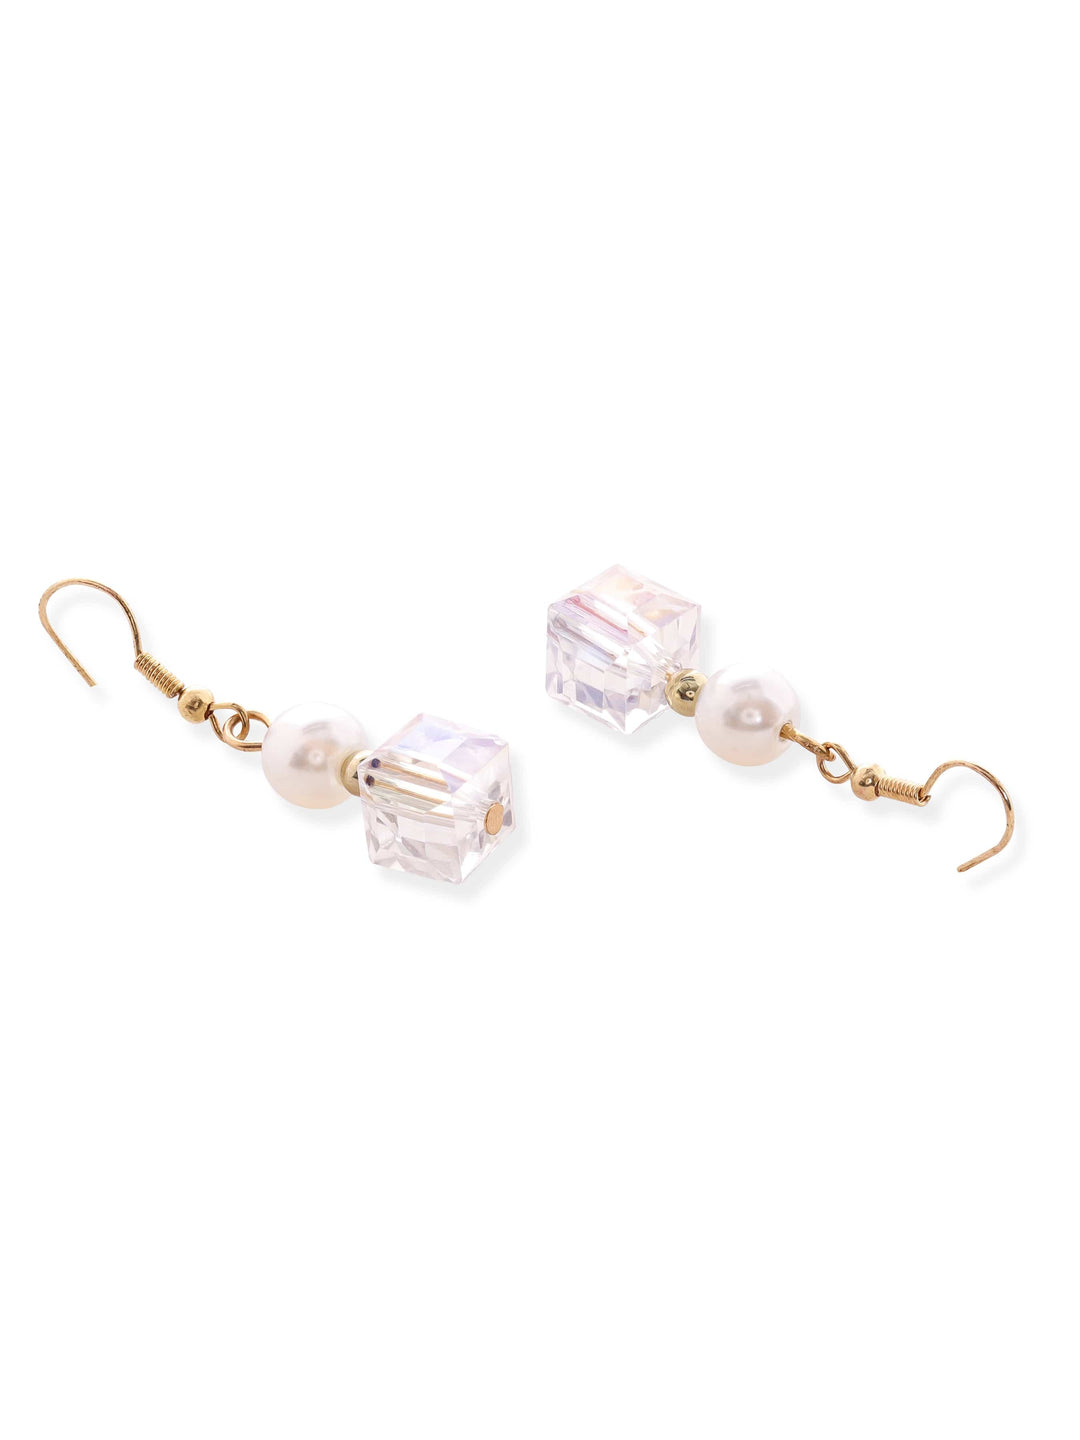 Rubans Cream Pearl & Crystal Beaded Classy Necklace Set Jewellery Sets